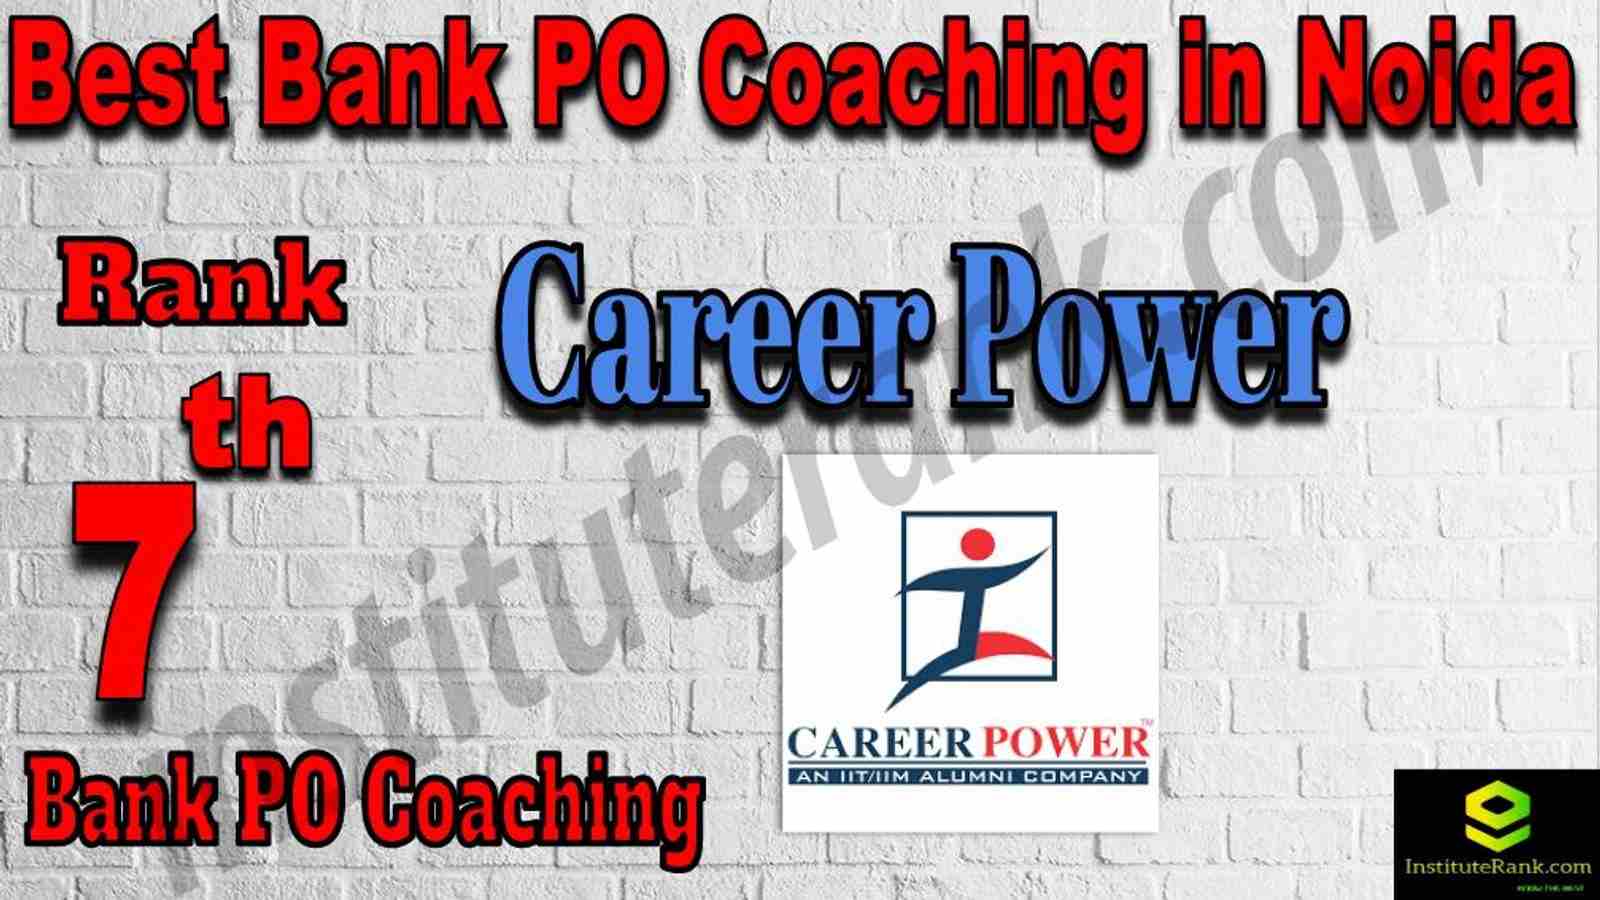 7th Best Bank PO Coaching in Noida